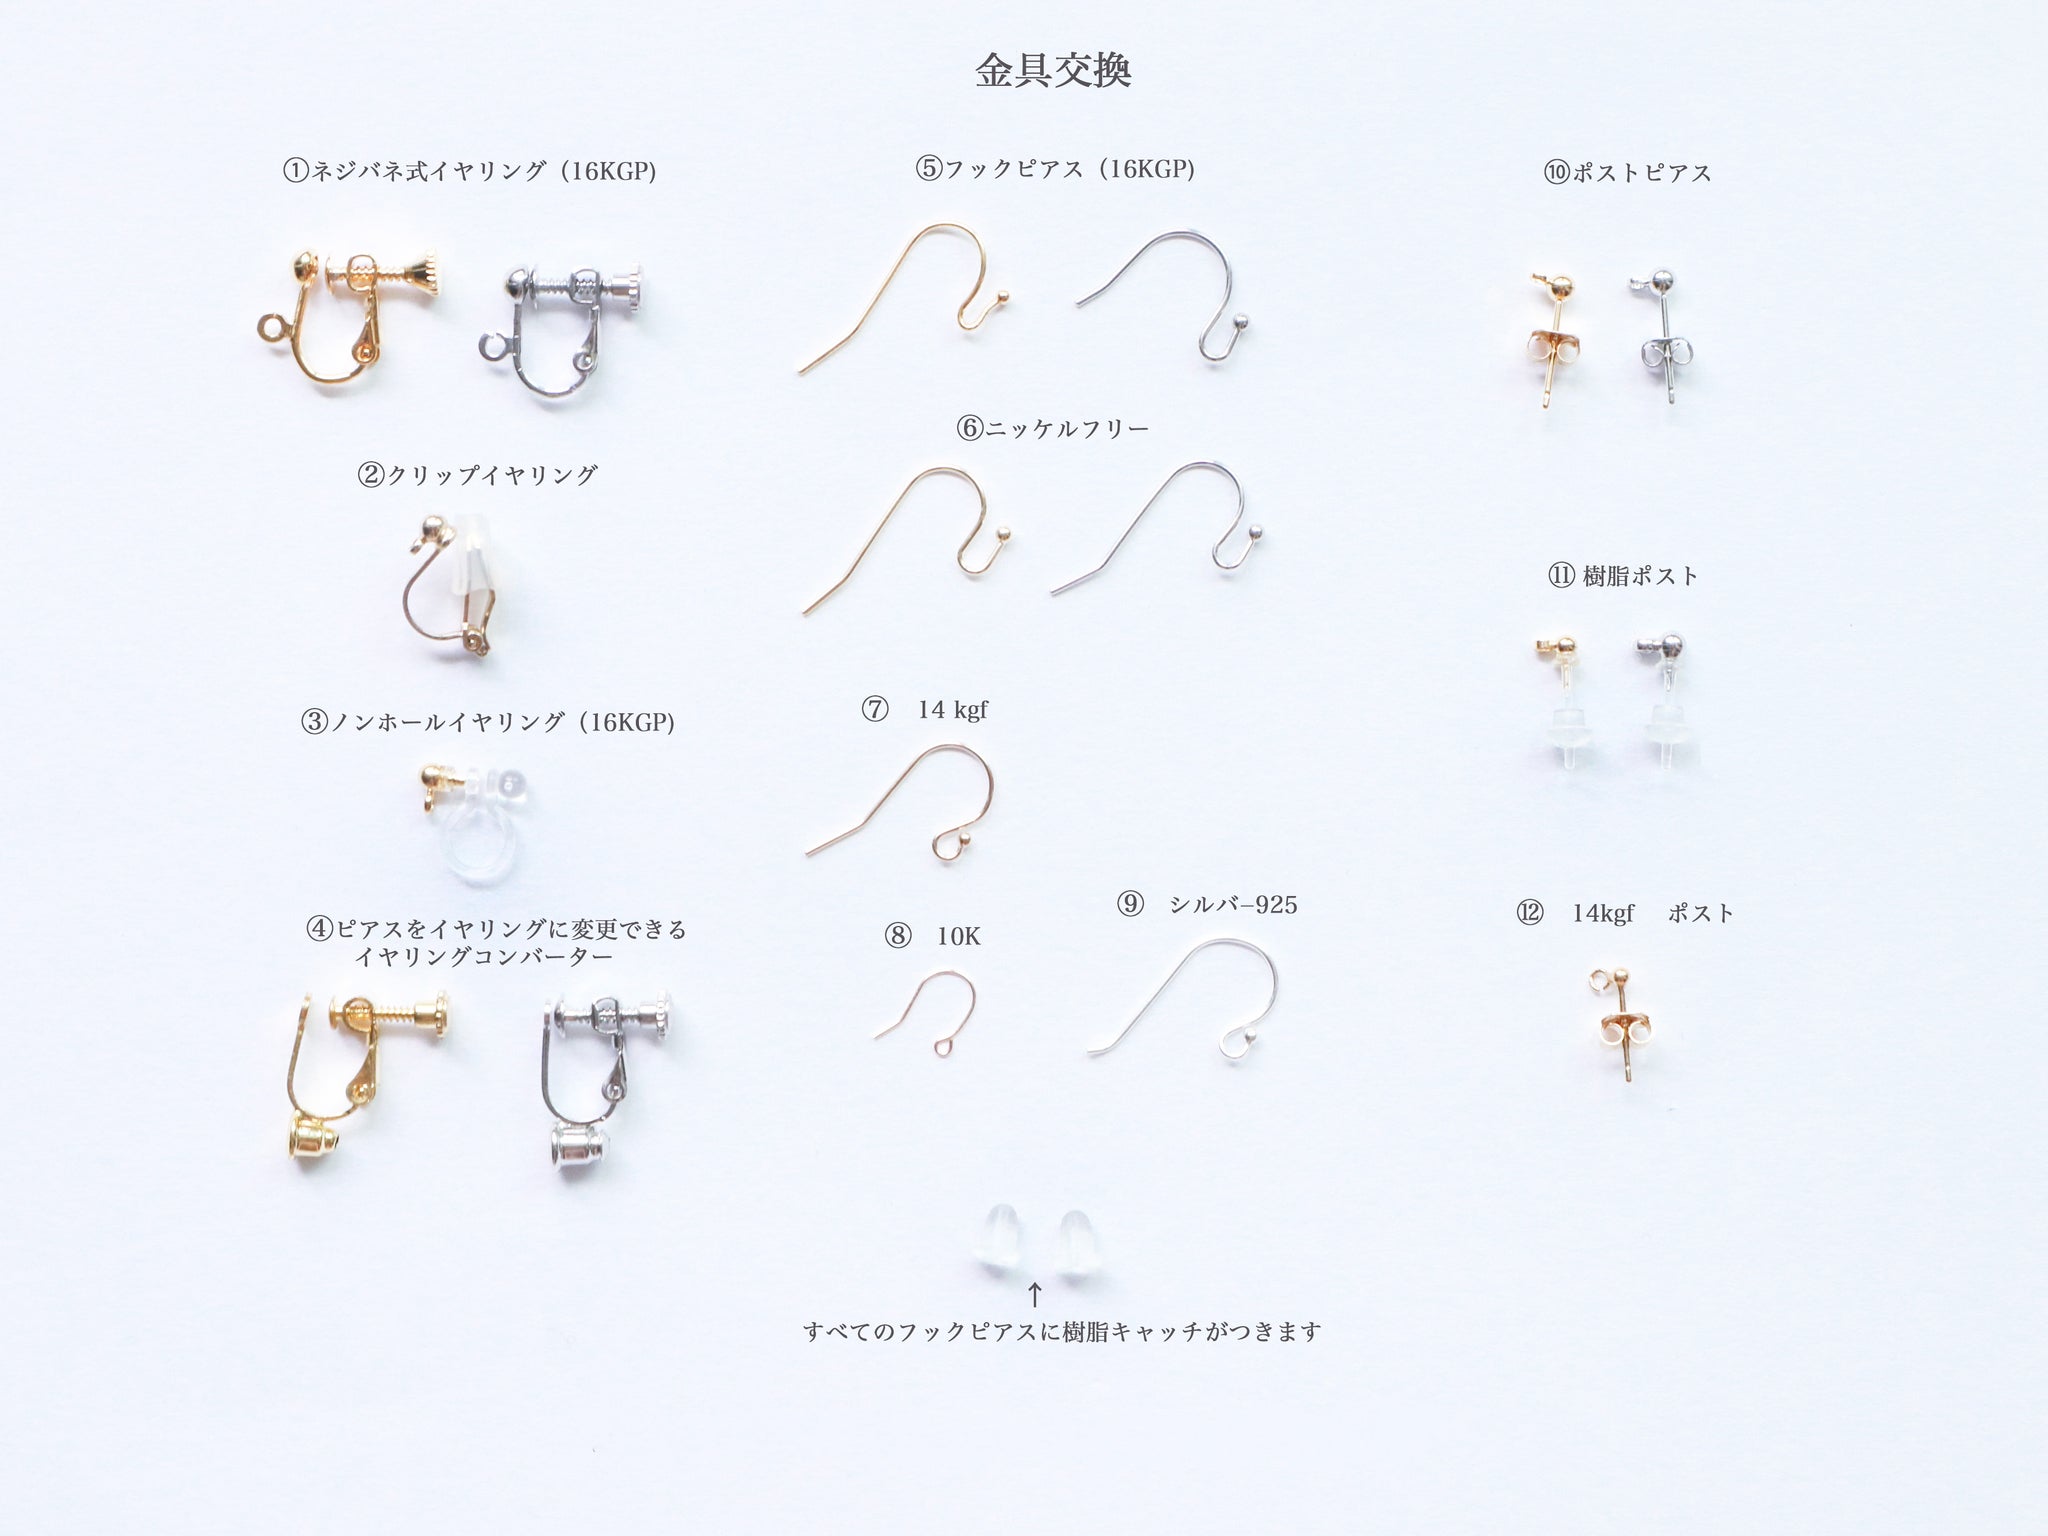 fuchsia earrings